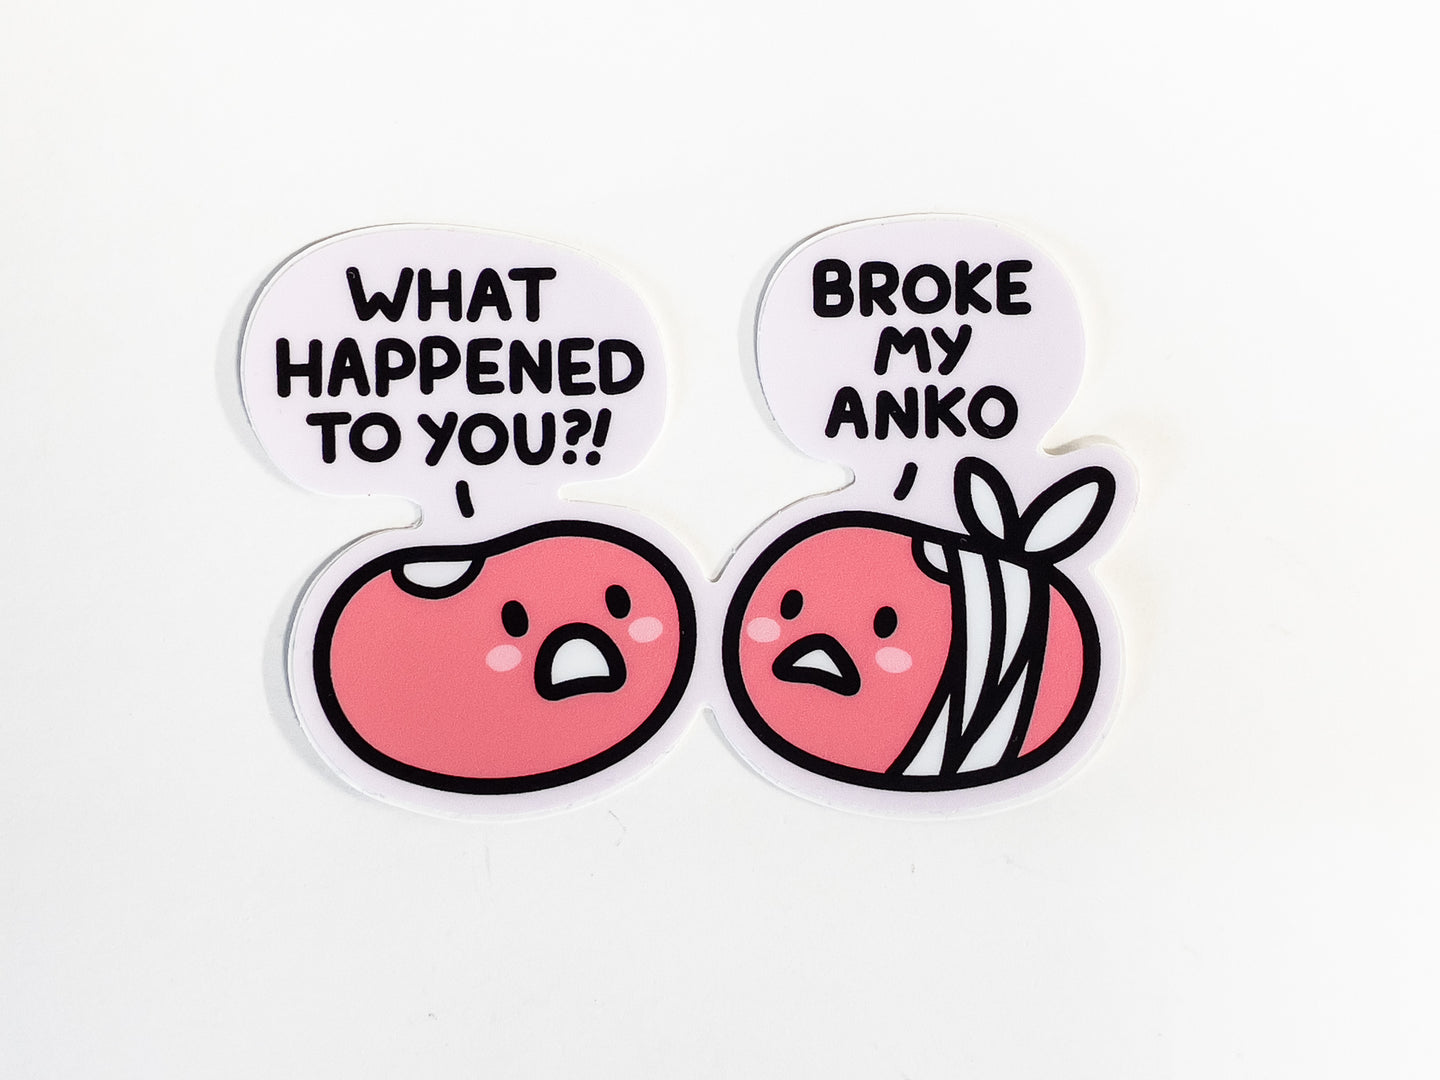 Broke my anko sticker